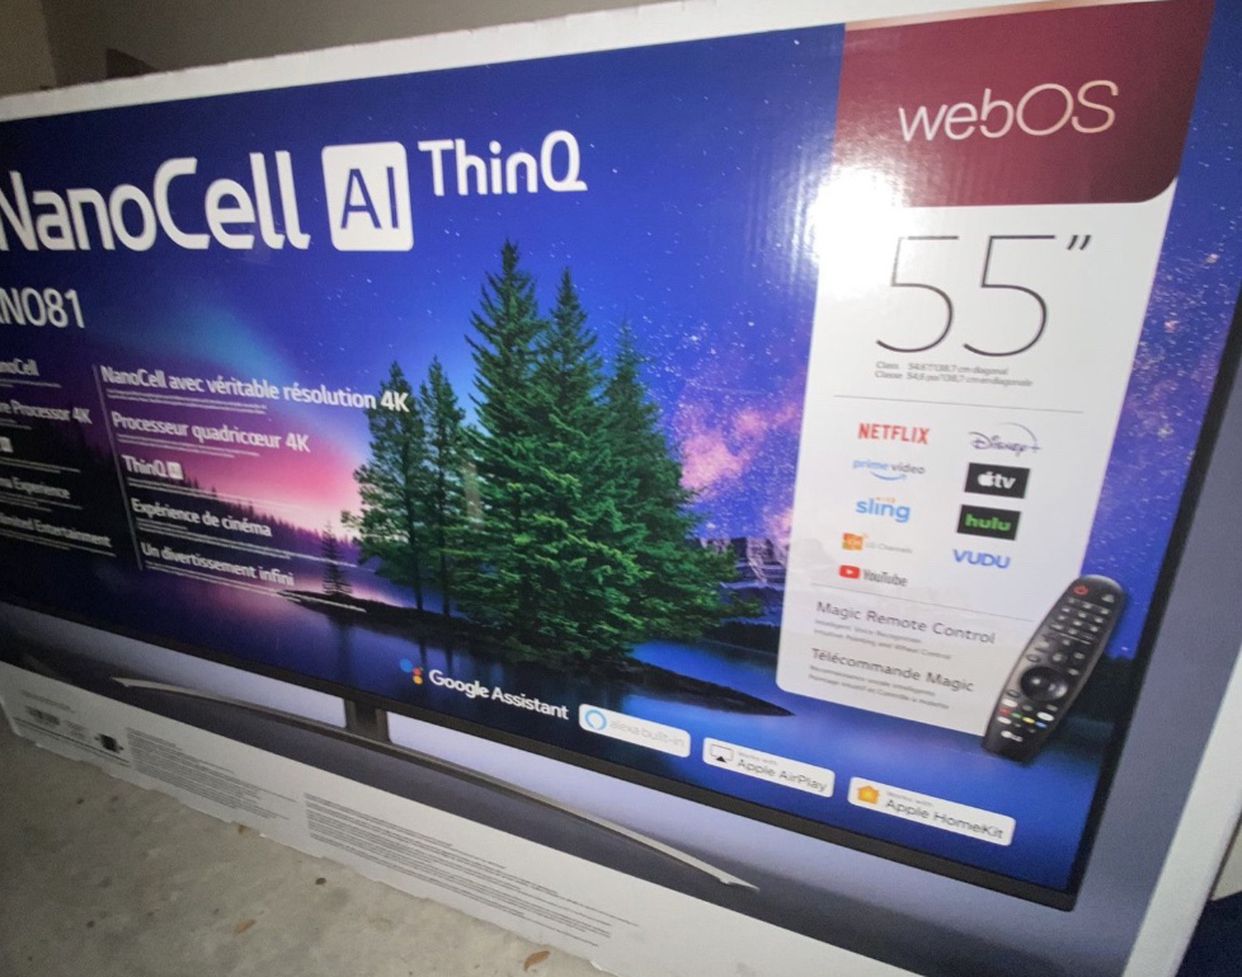 LG NanoCell 81 Series 2020 55 inch Class 4K Smart UHD NanoCell TV w/ AI ThinQ